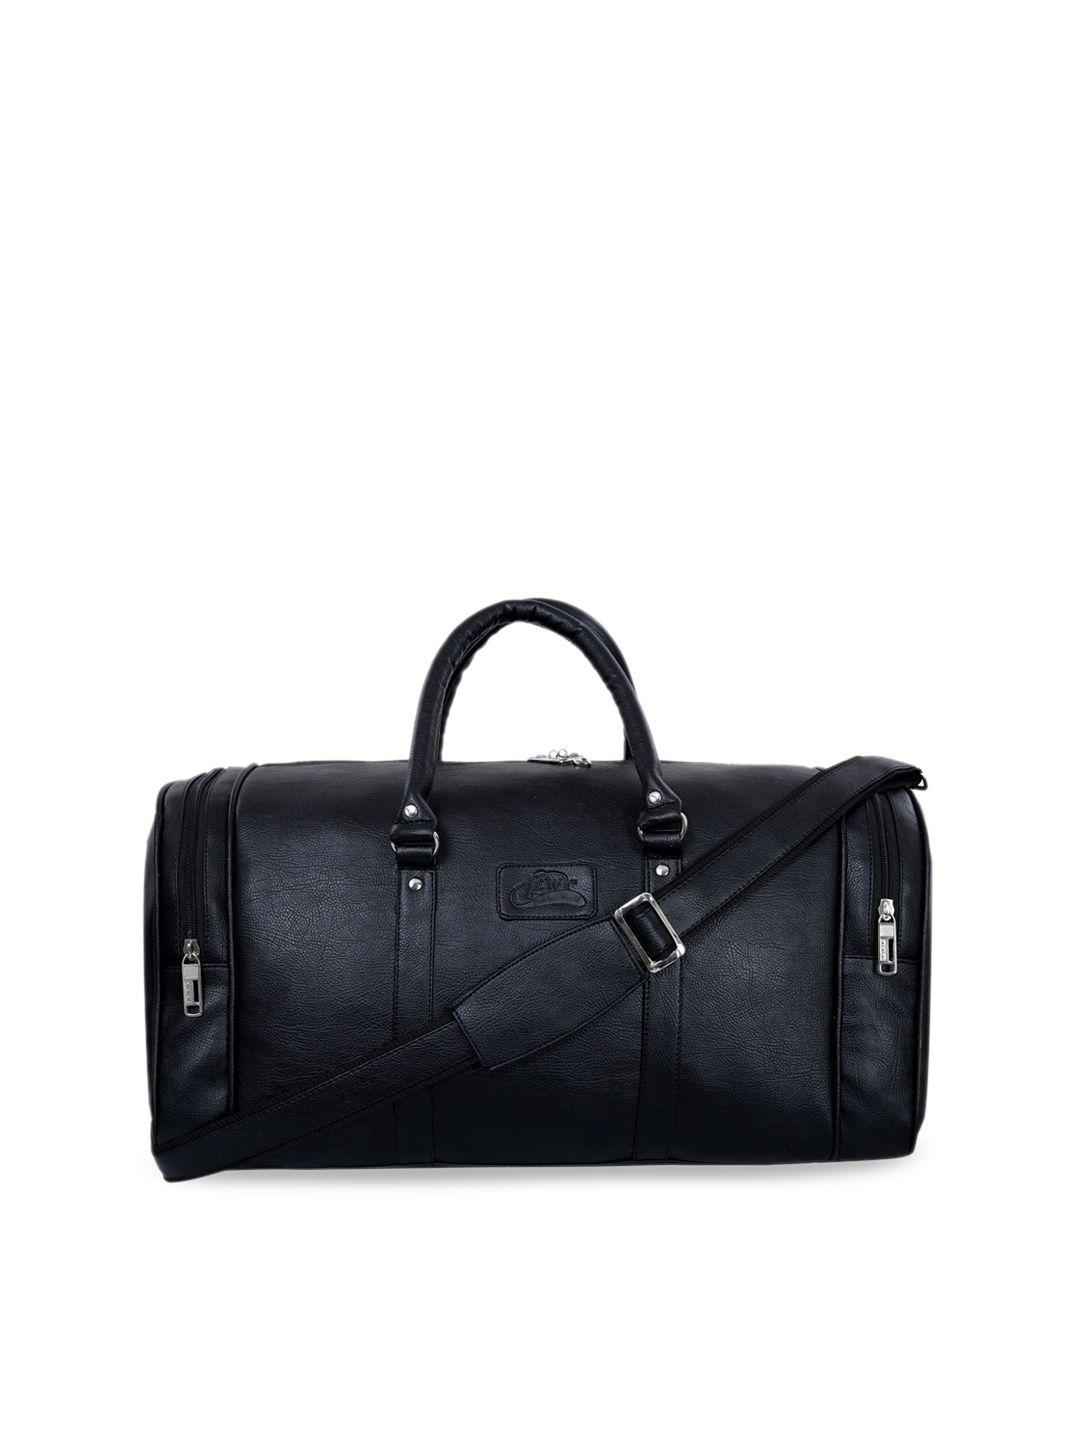 leather world unisex black solid large duffel bag